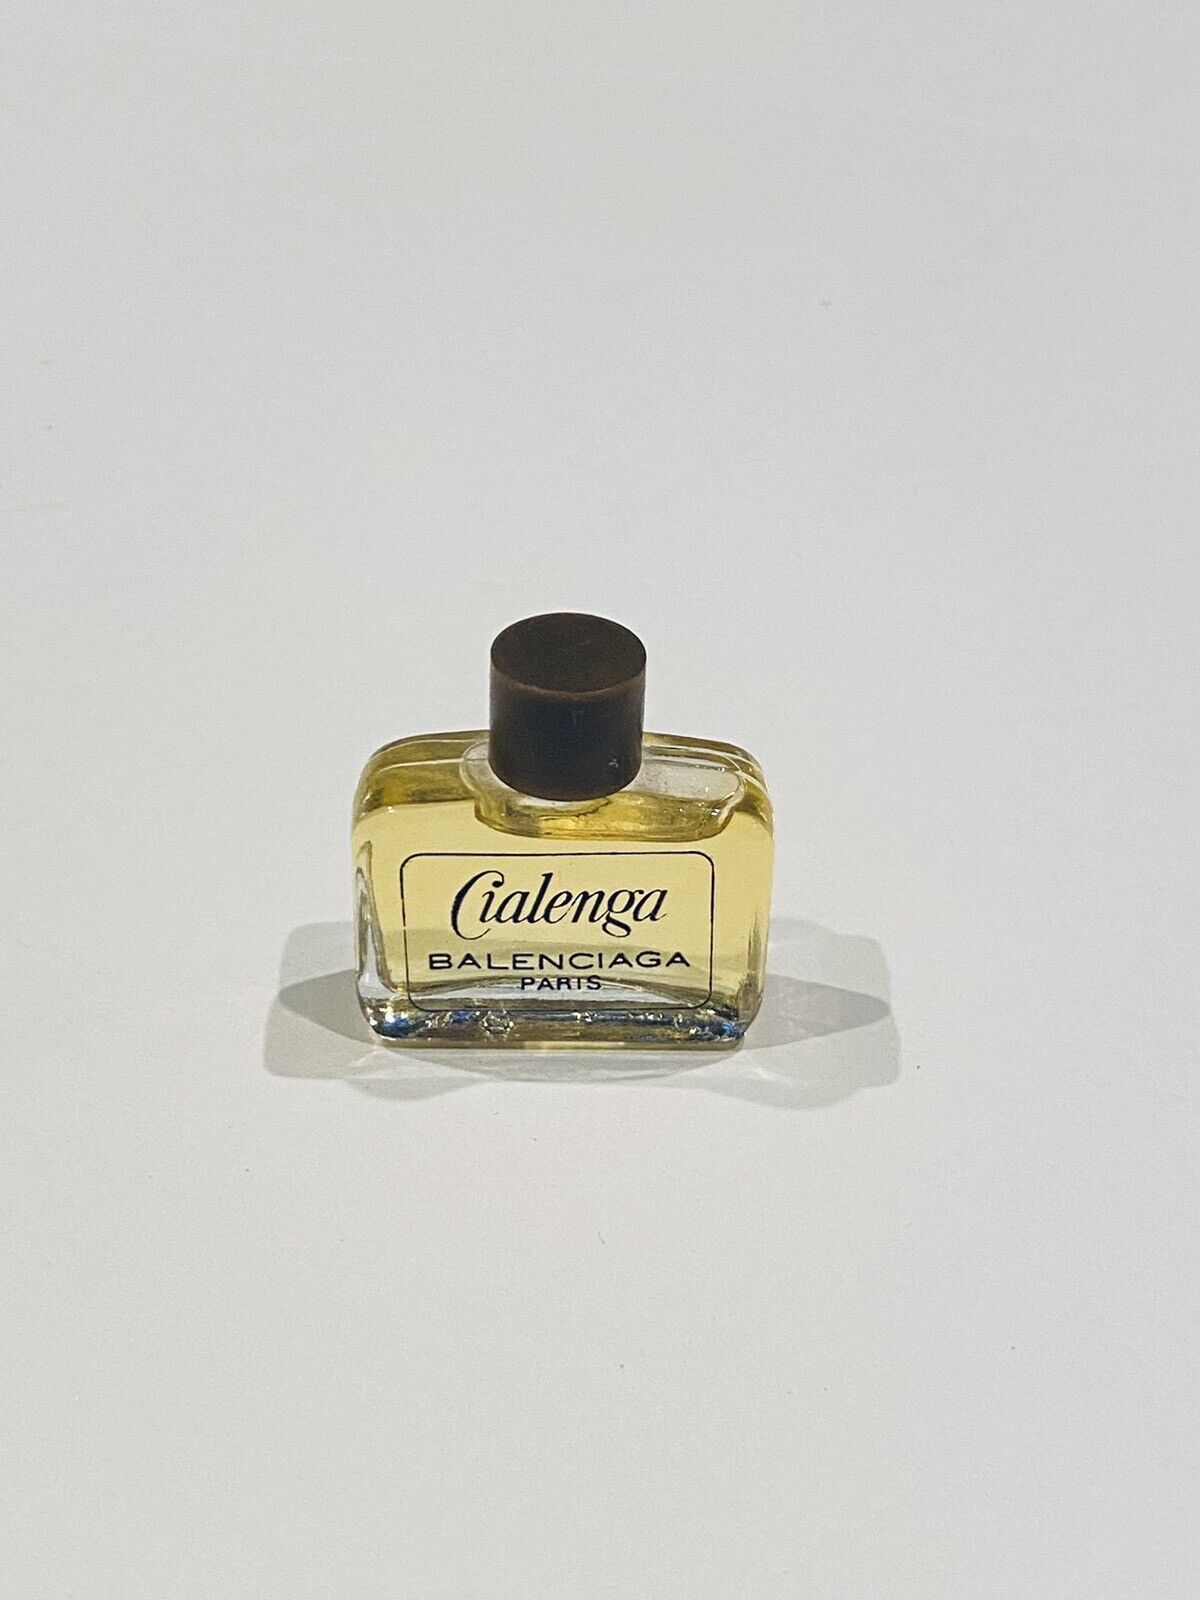 New Cialenga by Balenciaga Paris Vintage Perfume Miniature 4 ml No Box